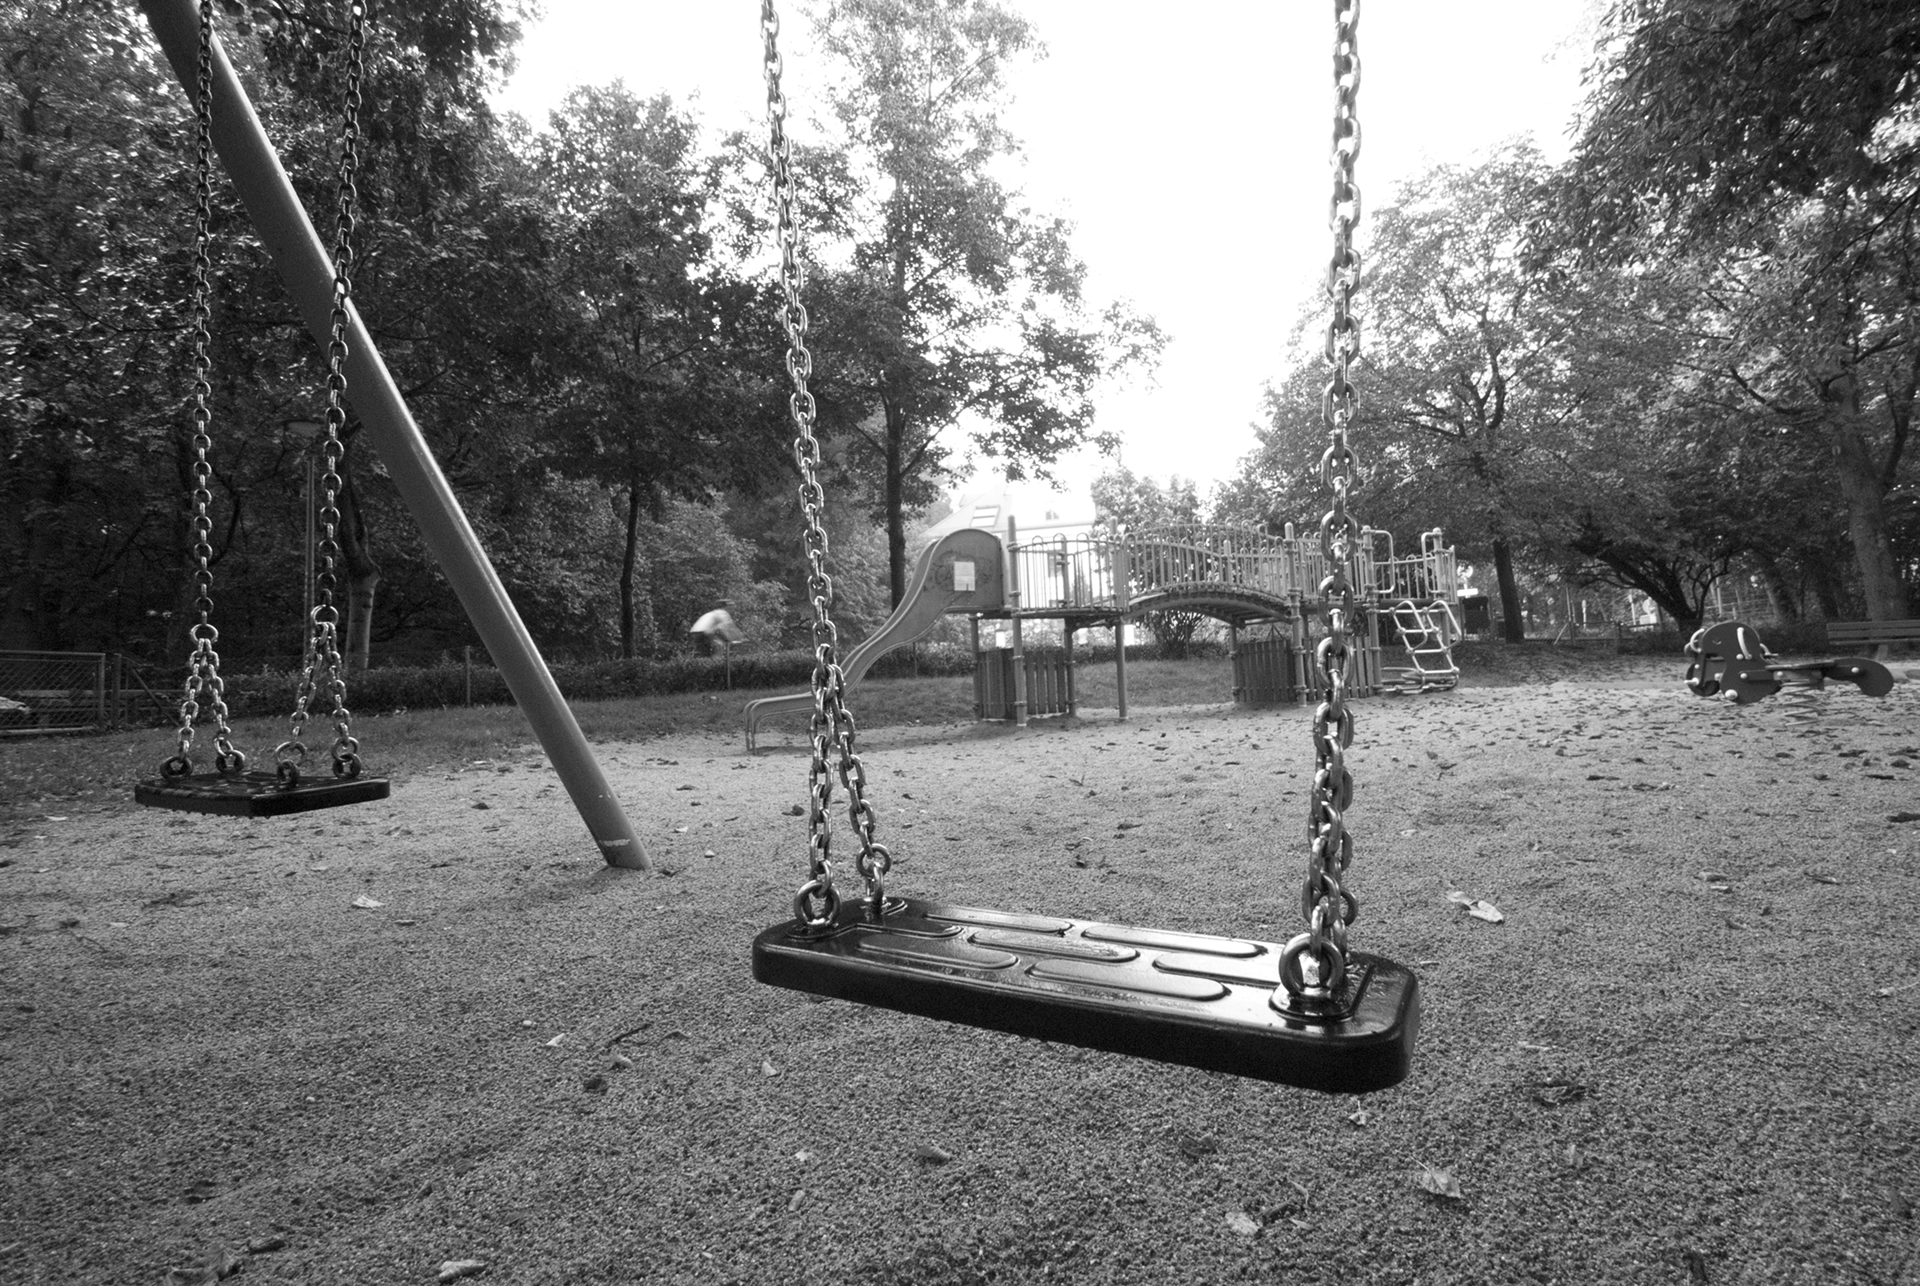 Abbeydorney playground gets planning permission | Radio Kerry